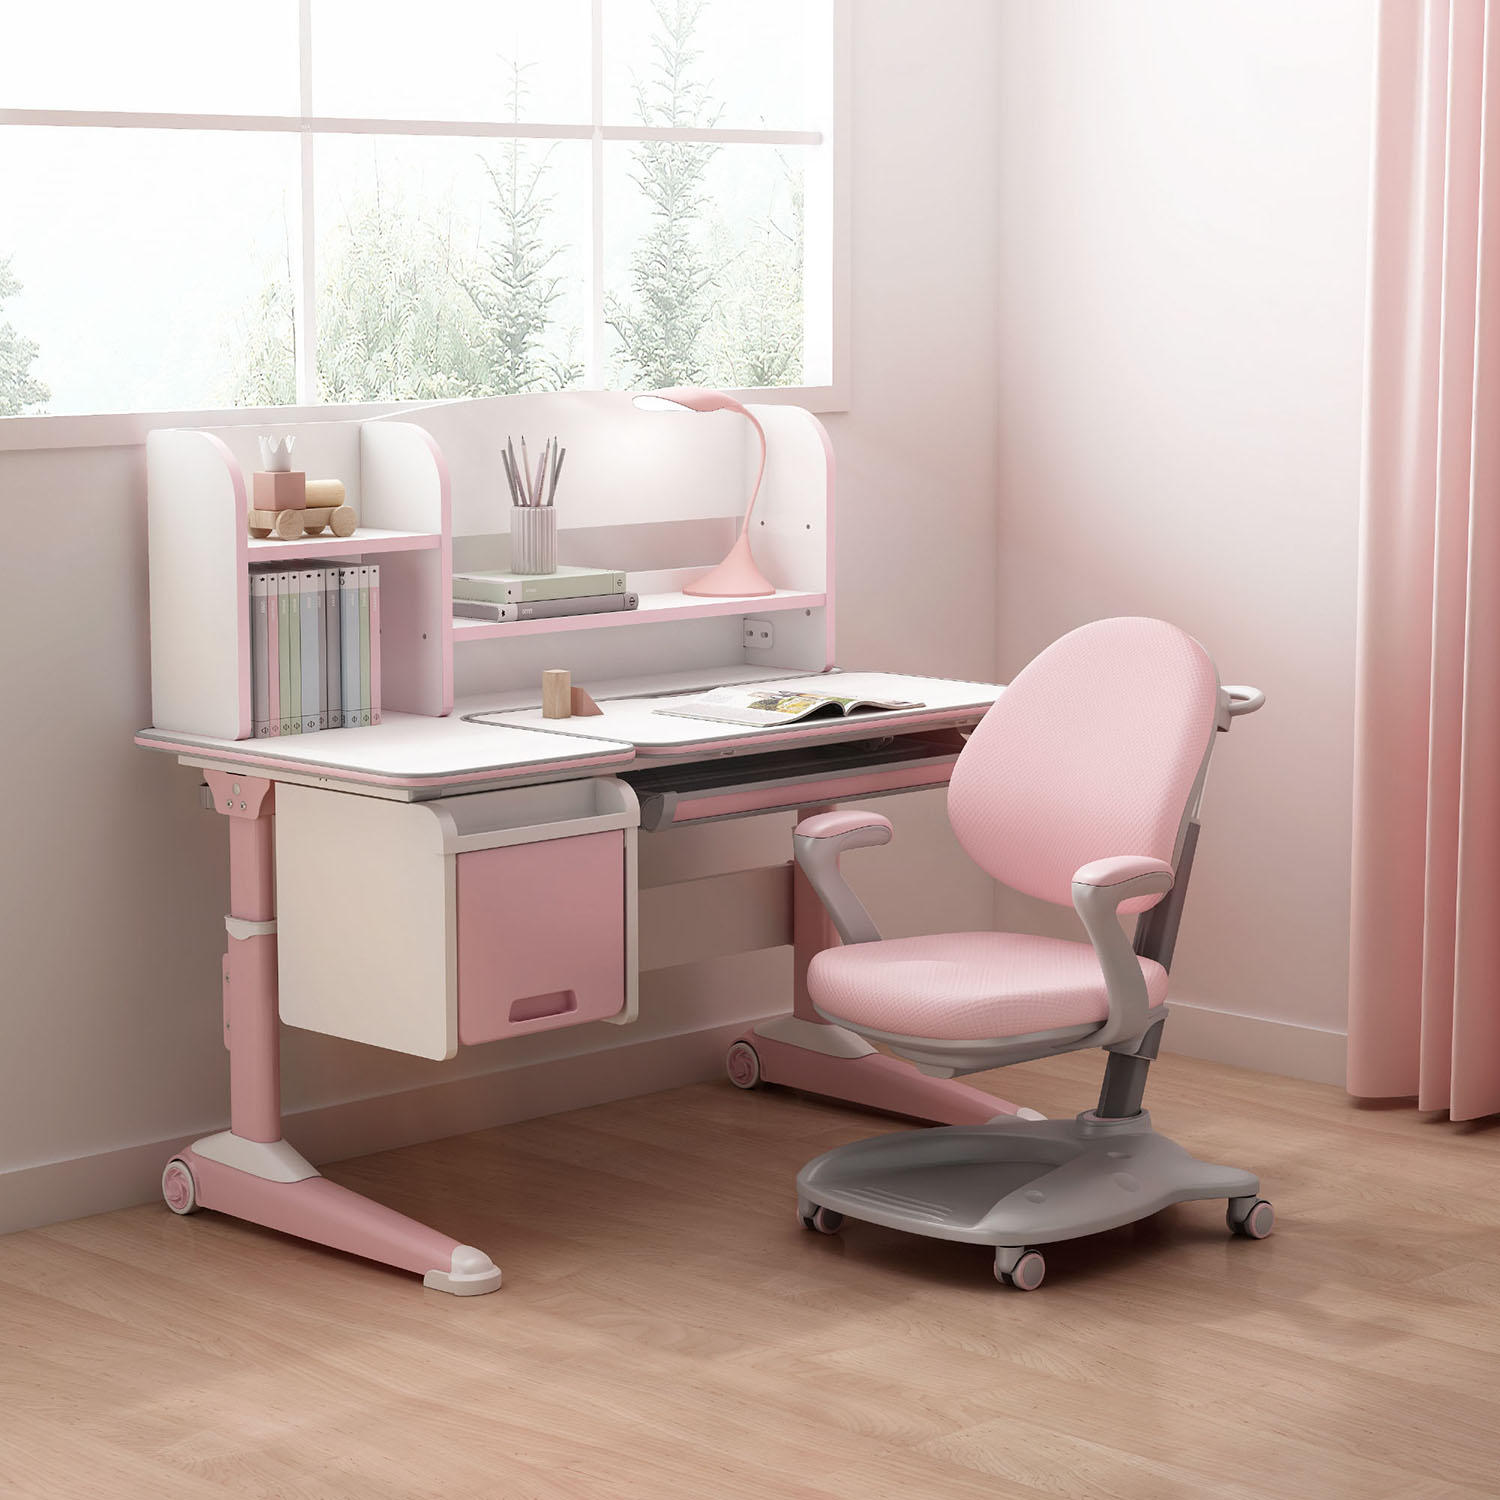 AmaMedic Kids Ergo Study Desk/Chair Combo Set